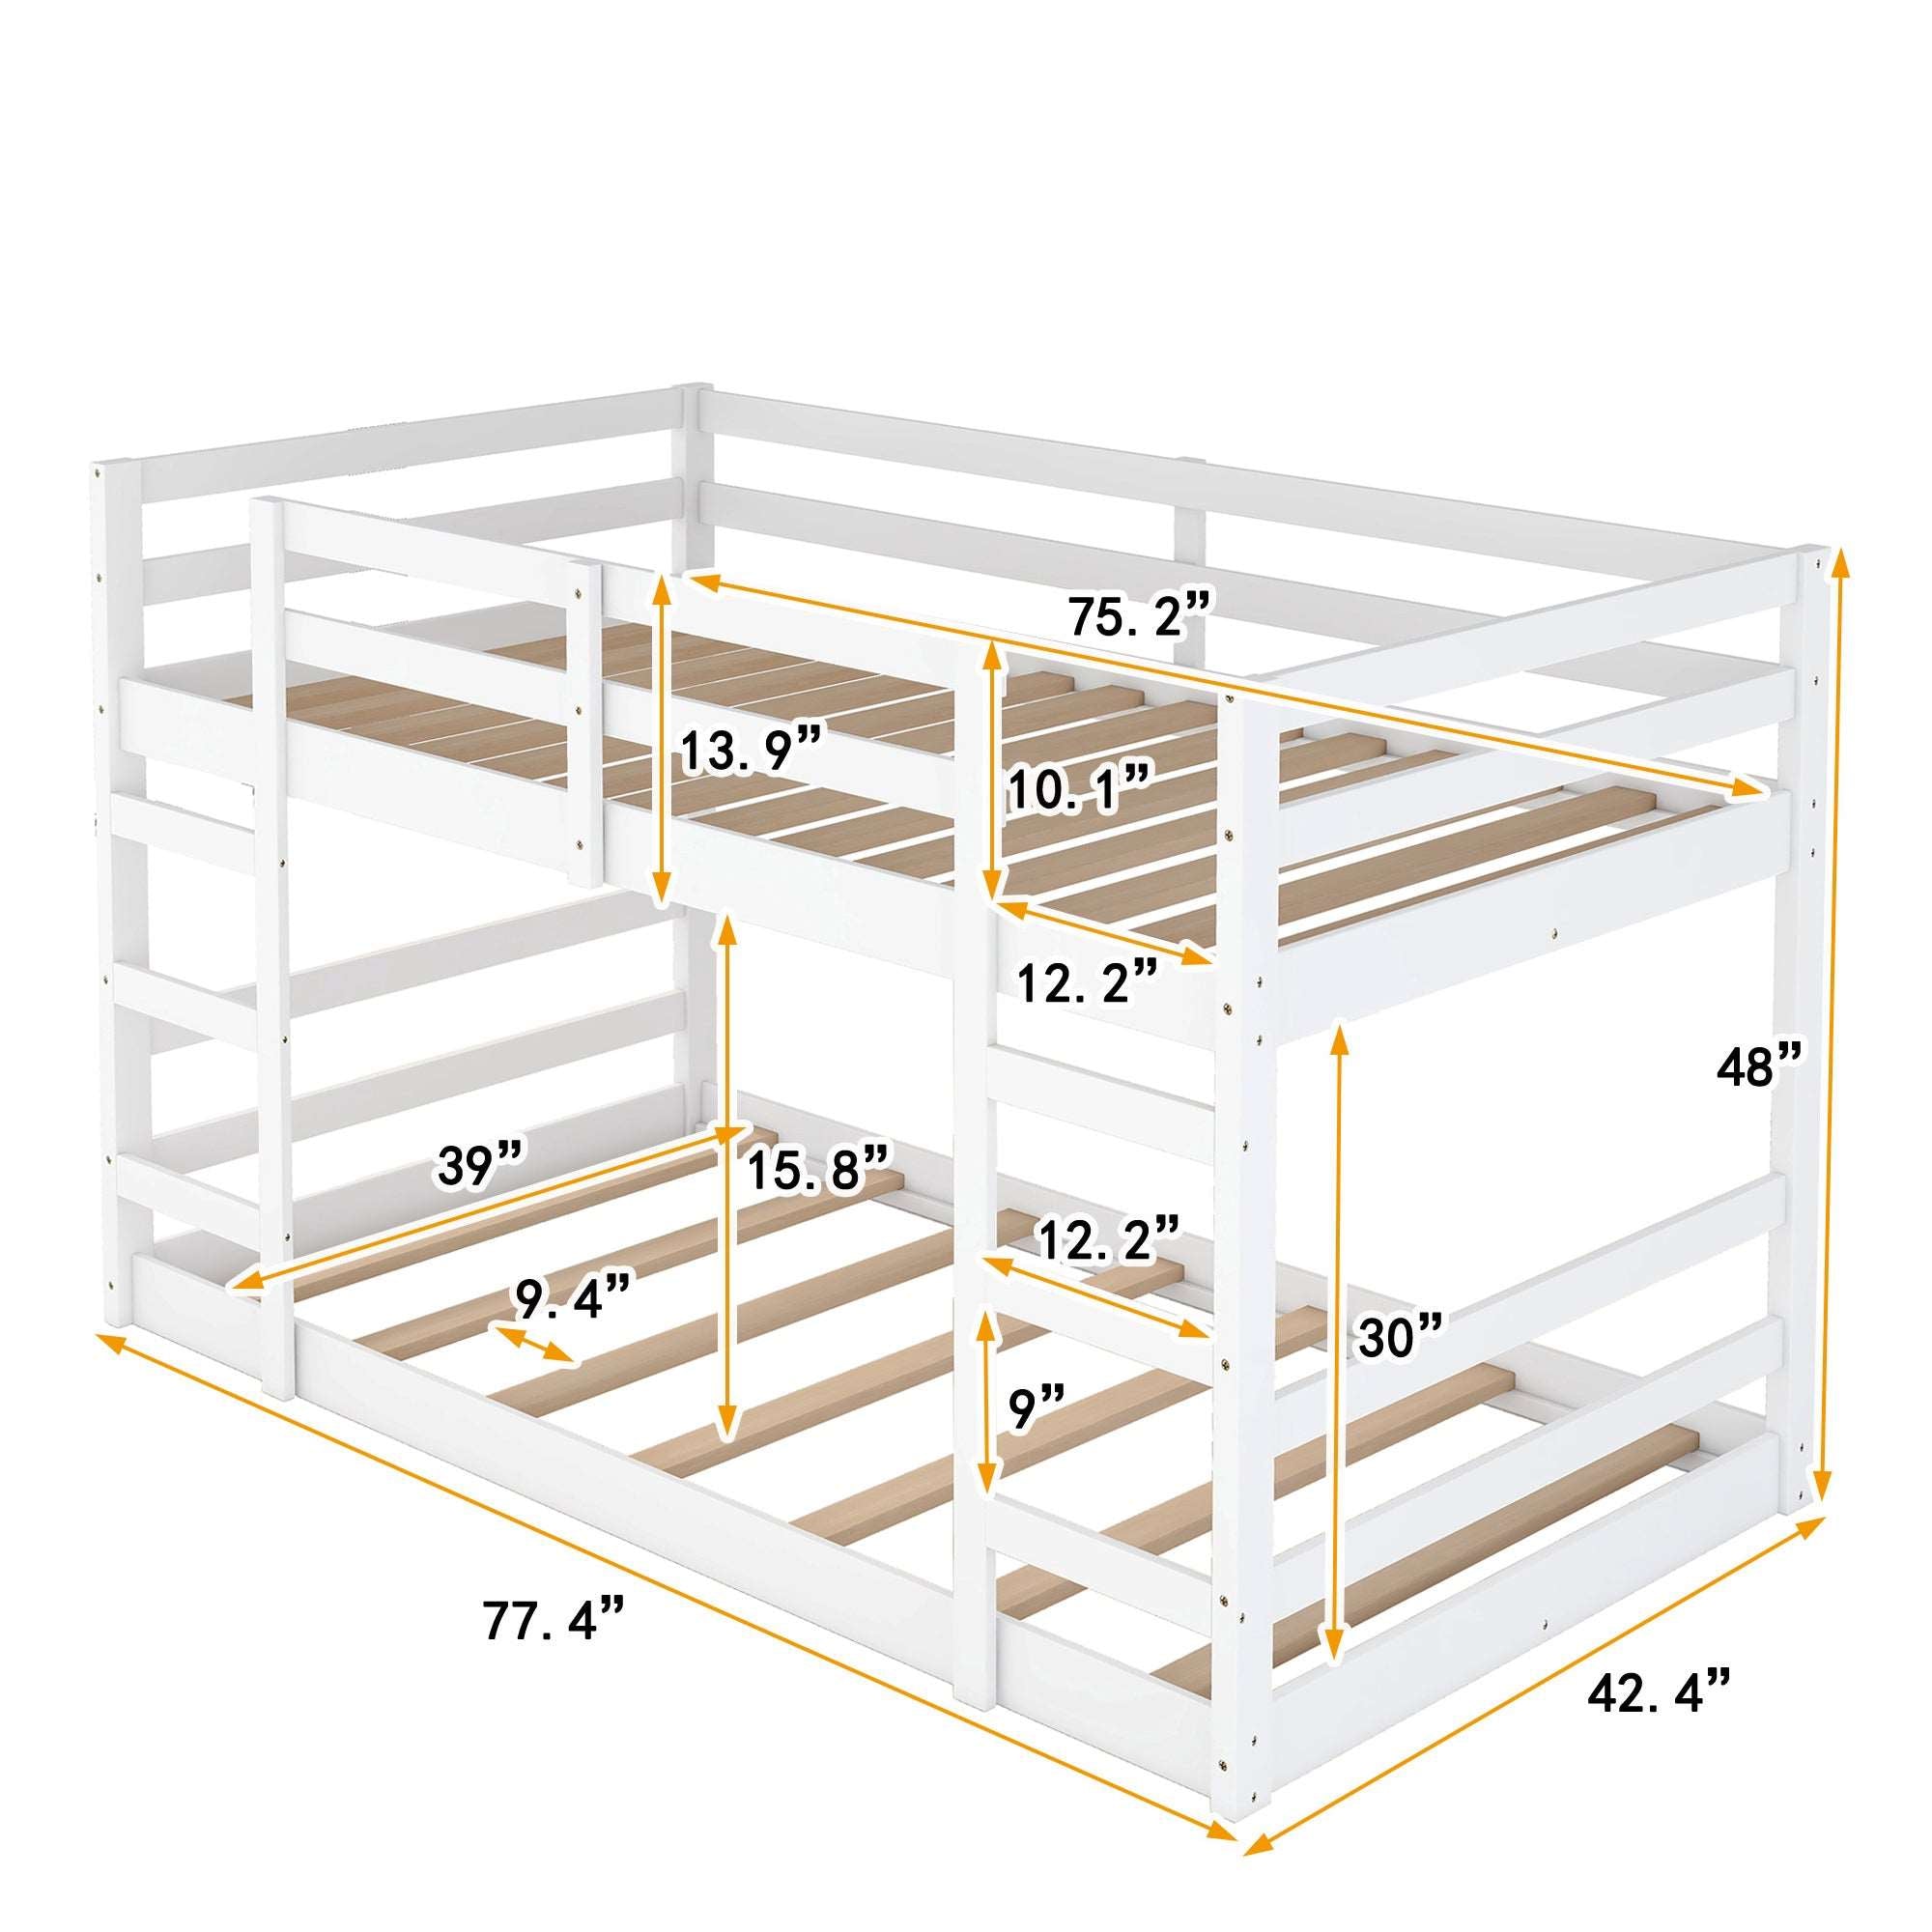 Bellemave® Bunk Bed with Ladder